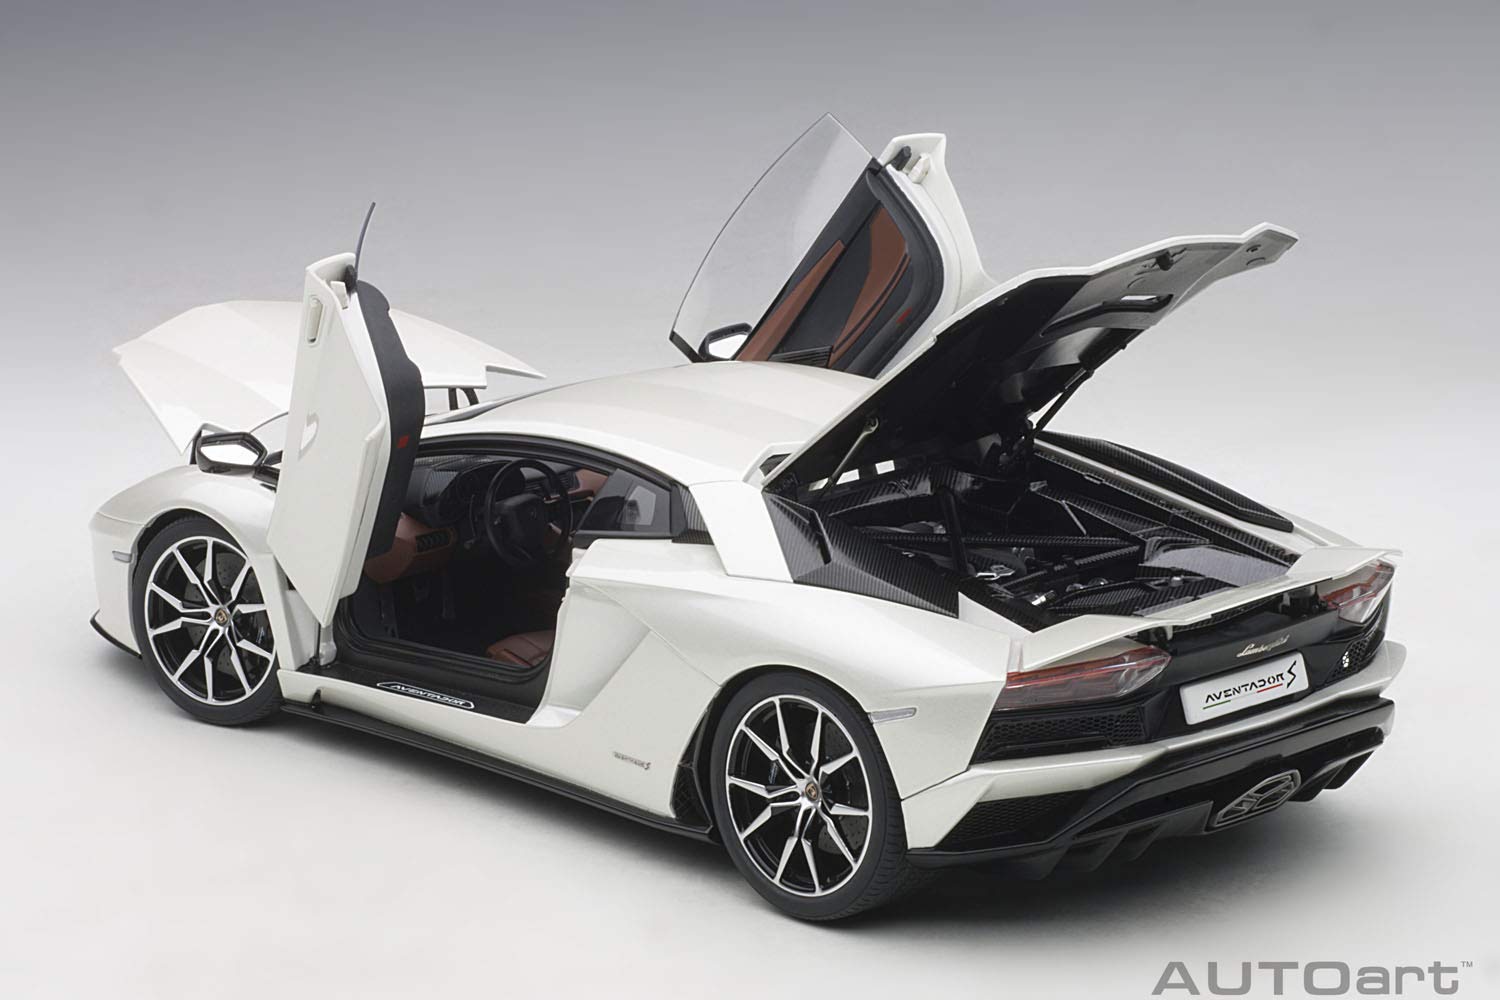 Mua AUTOart 1/18 Lamborghini Aventador S, Pearl White, Finished Product  trên Amazon Nhật chính hãng 2023 | Giaonhan247